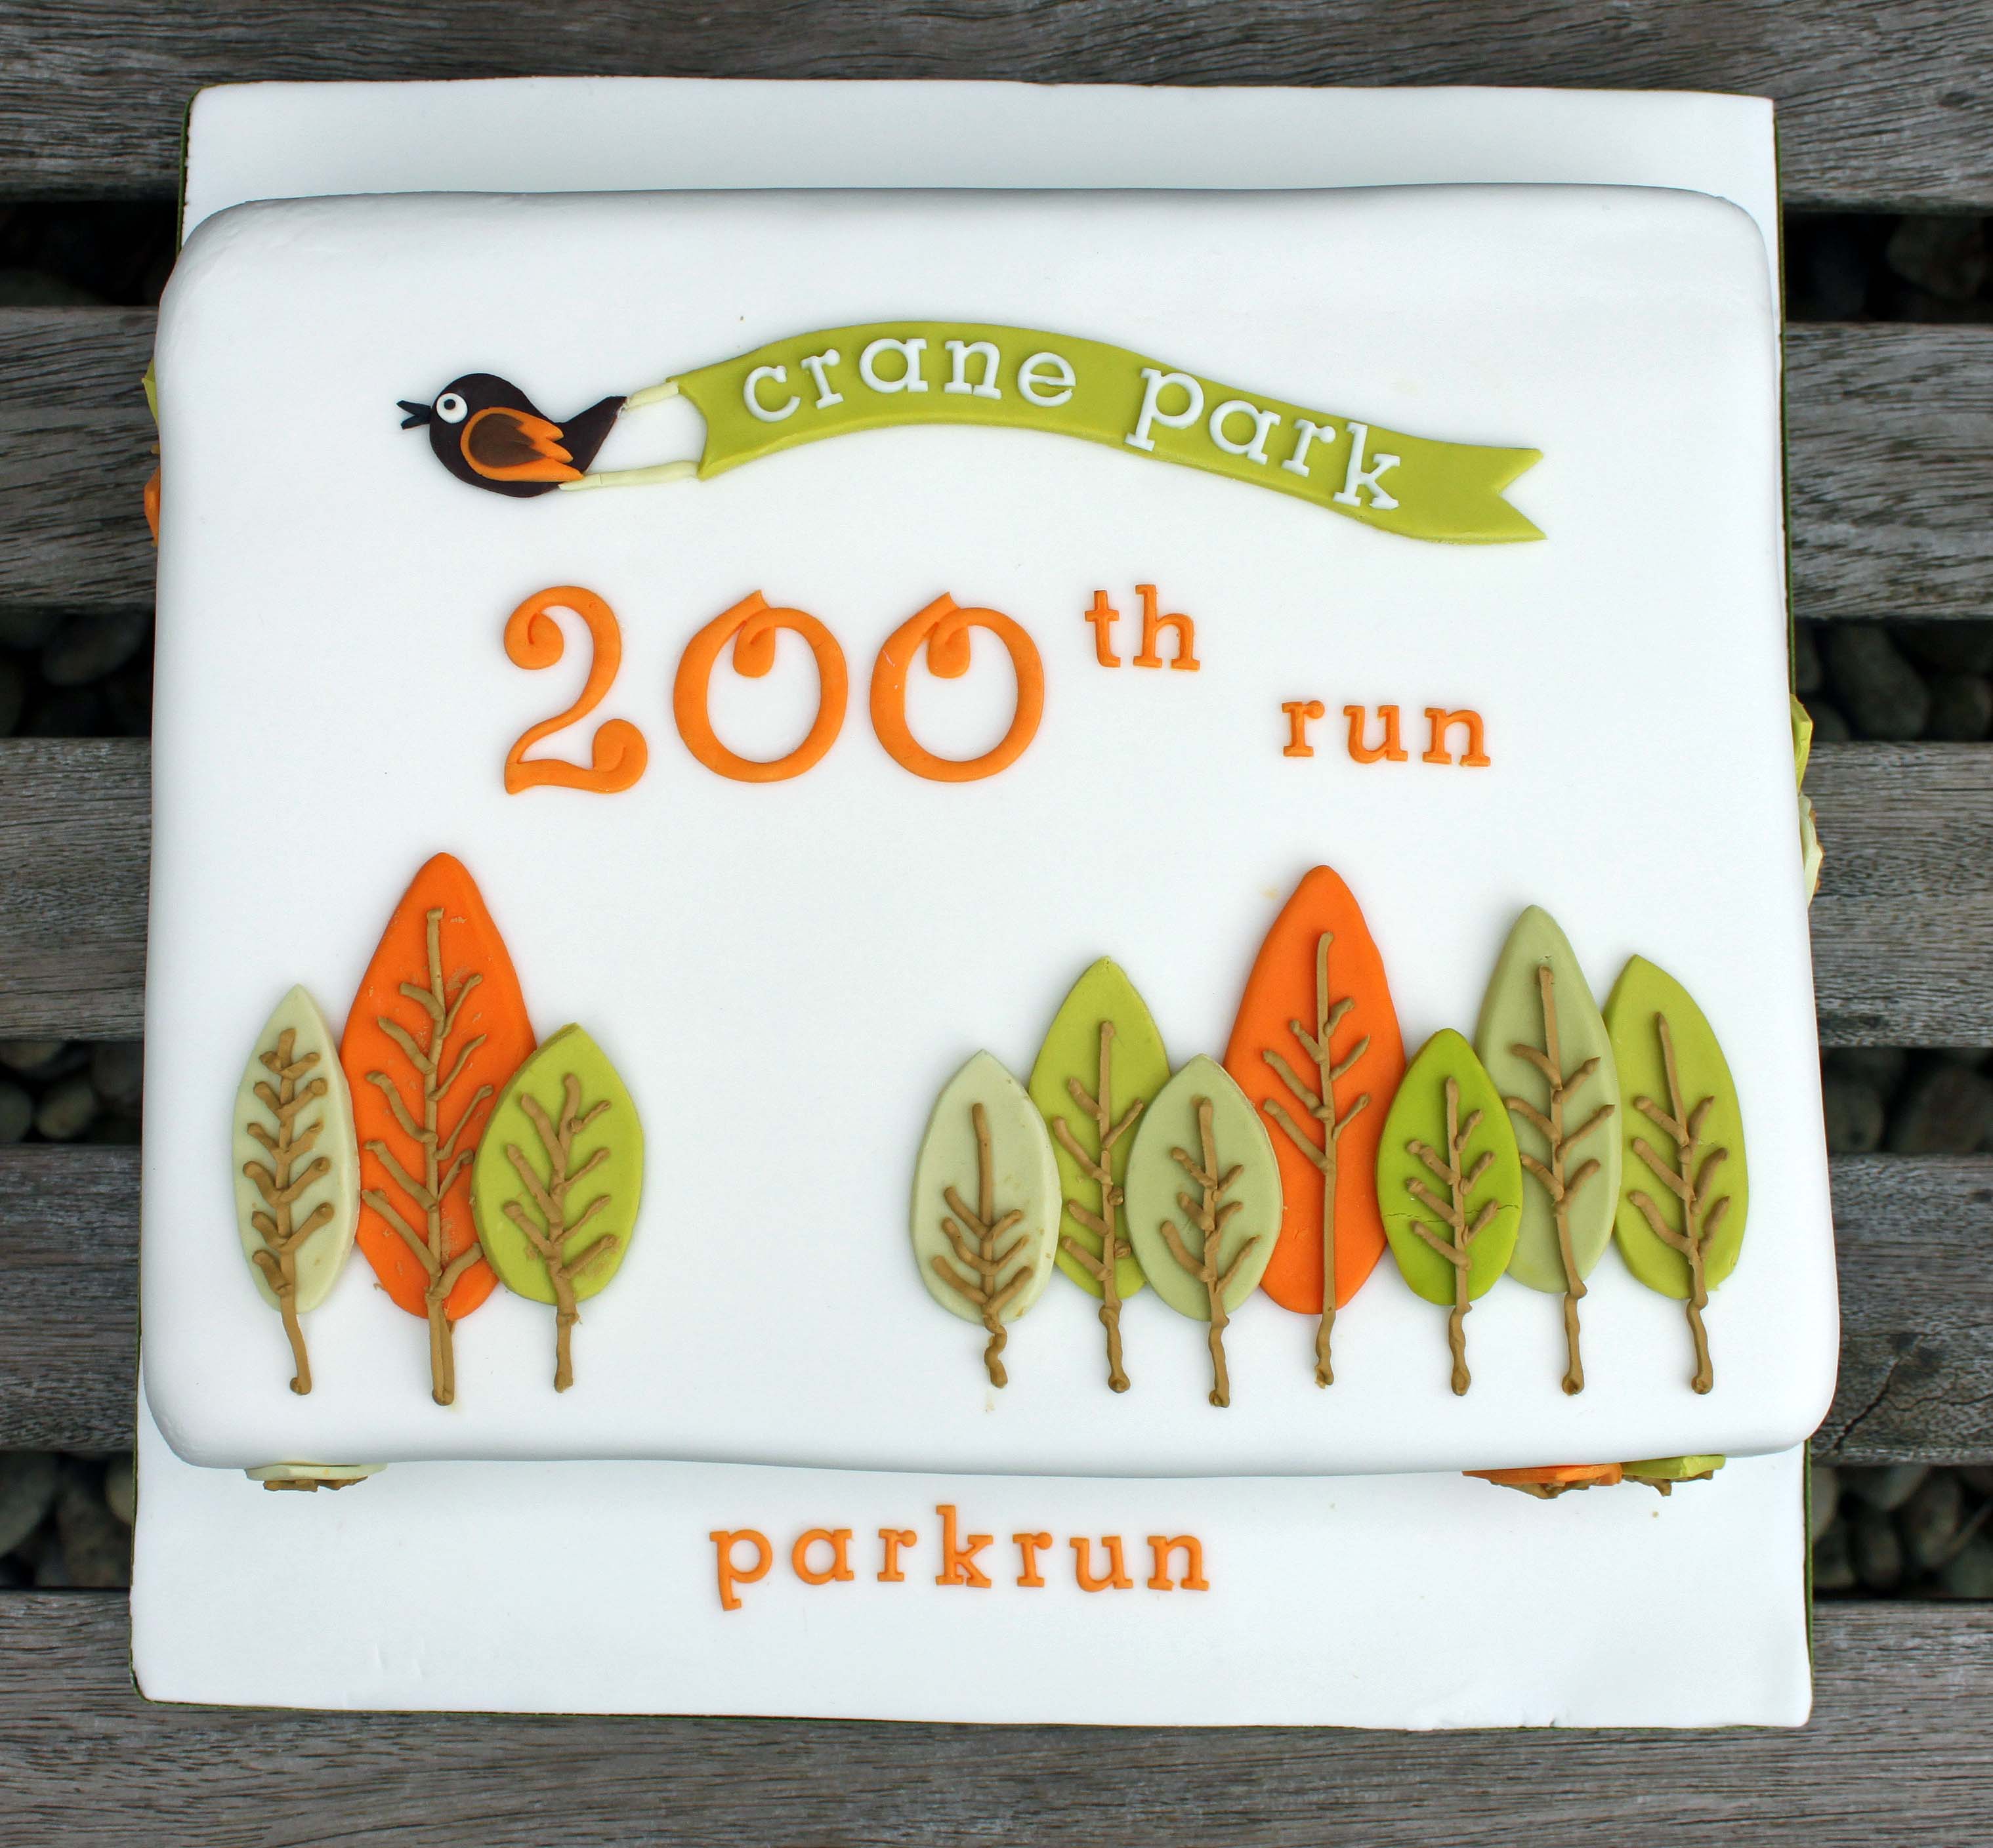 parkrun 200th run celebration cake